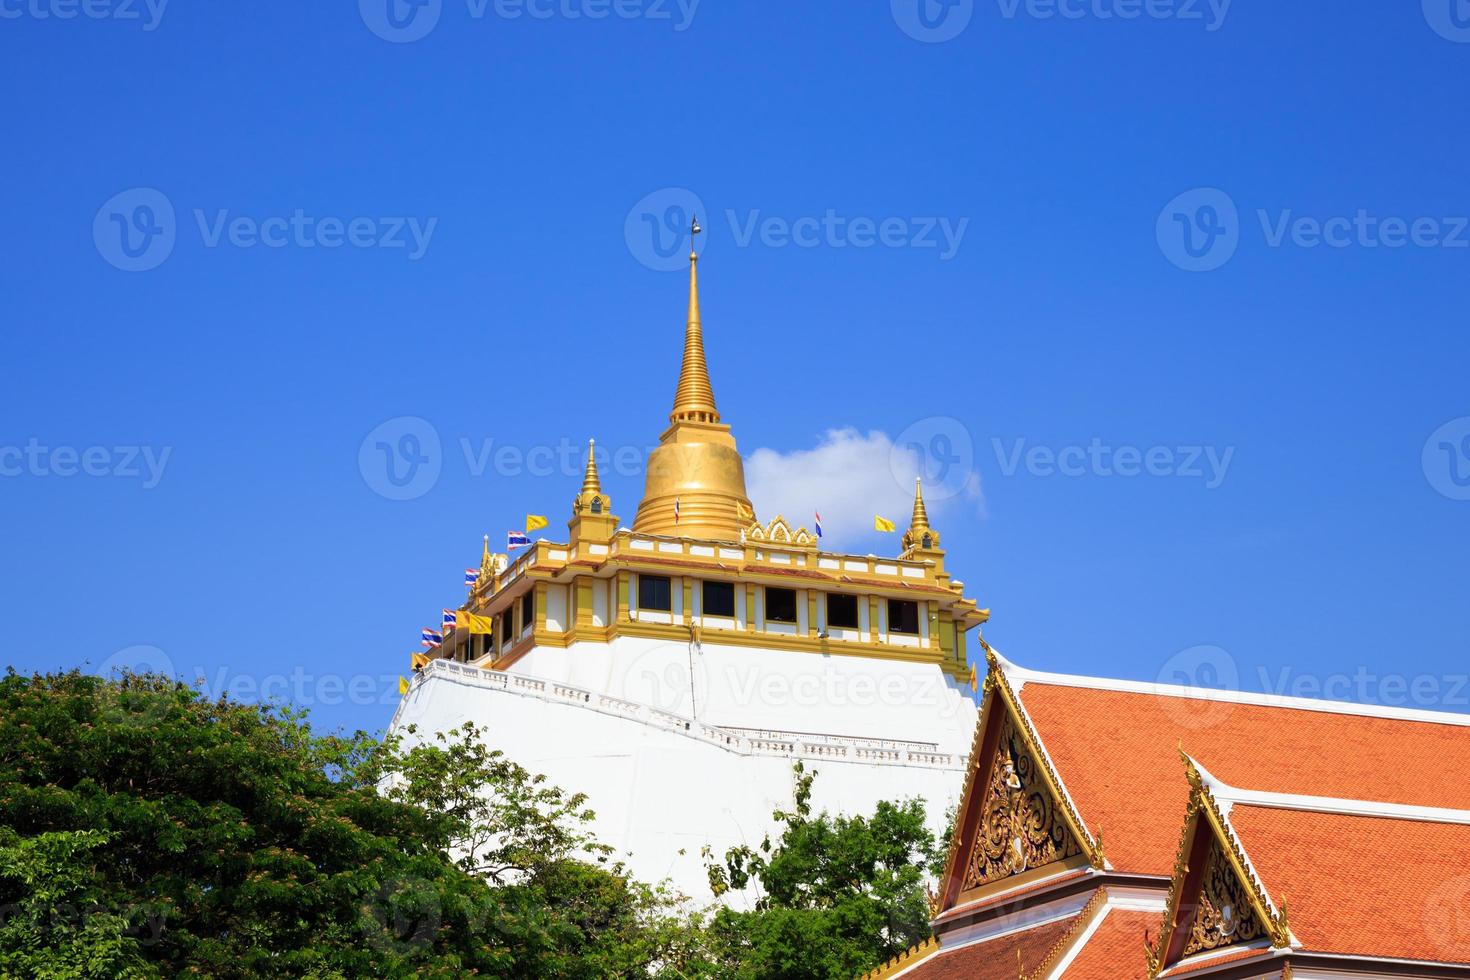 gyllene berg, en gammal pagod vid wat saket-templet i bangkok, thailand foto